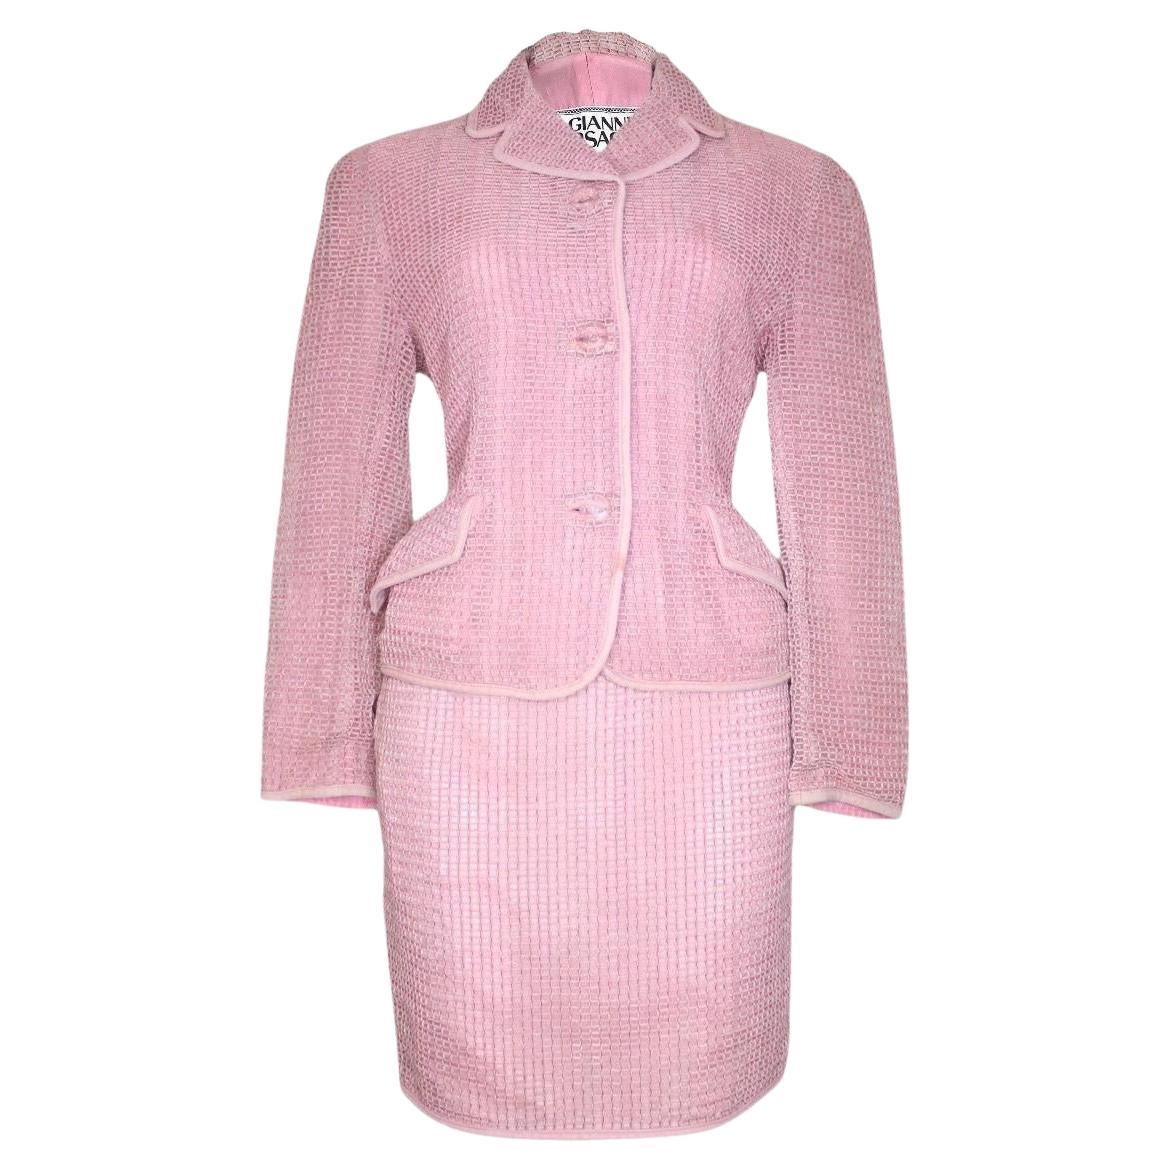 Gianni Versace Suit   Pink Jacket Skirt Set 1990's